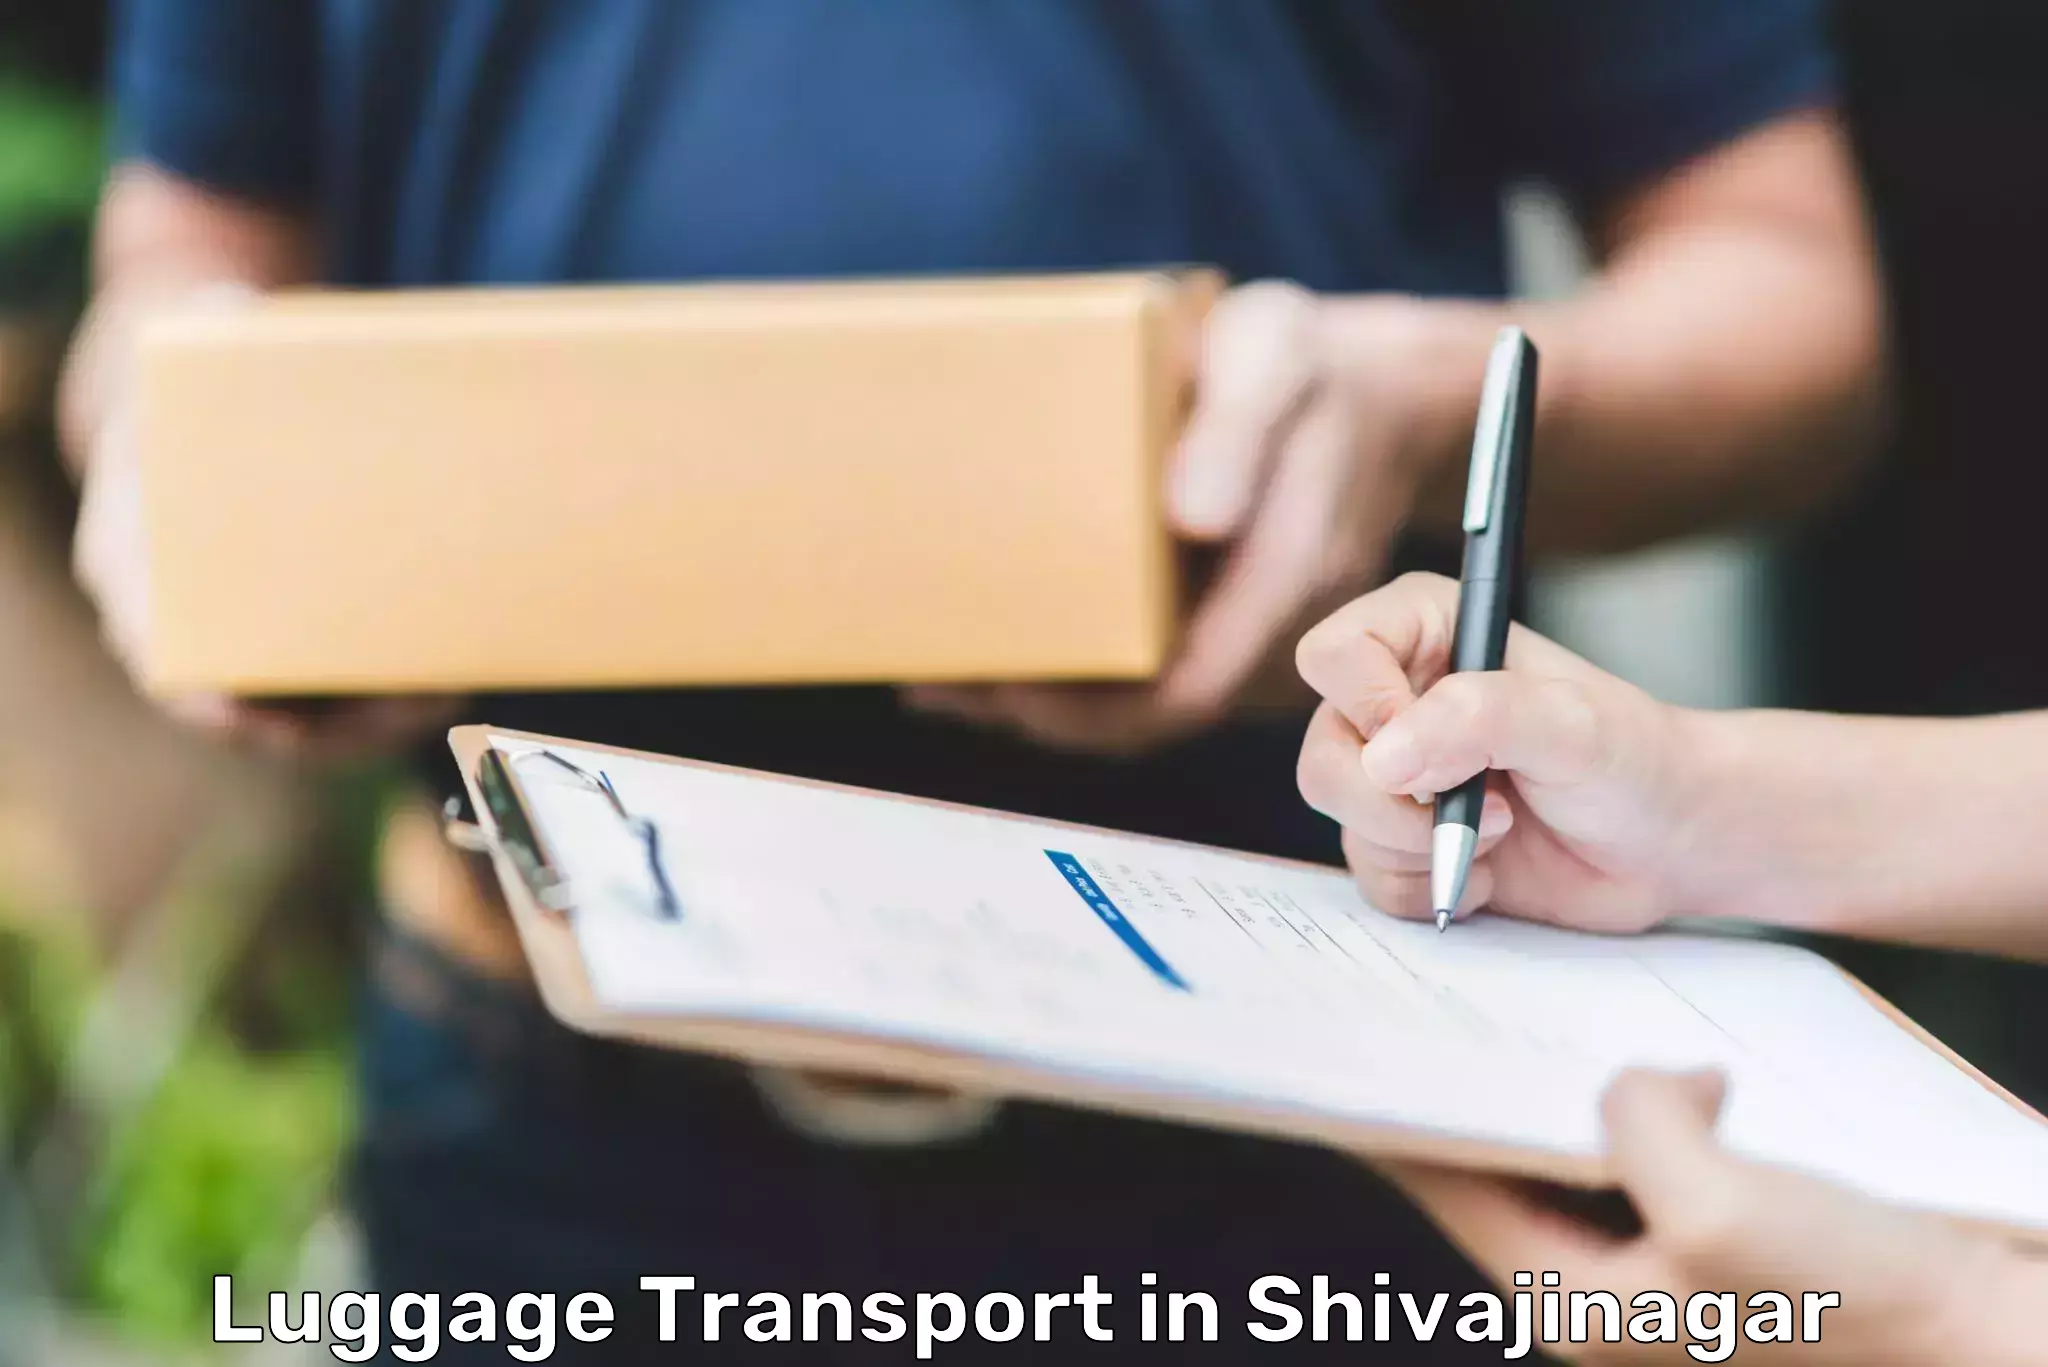 Luggage transport operations in Shivajinagar